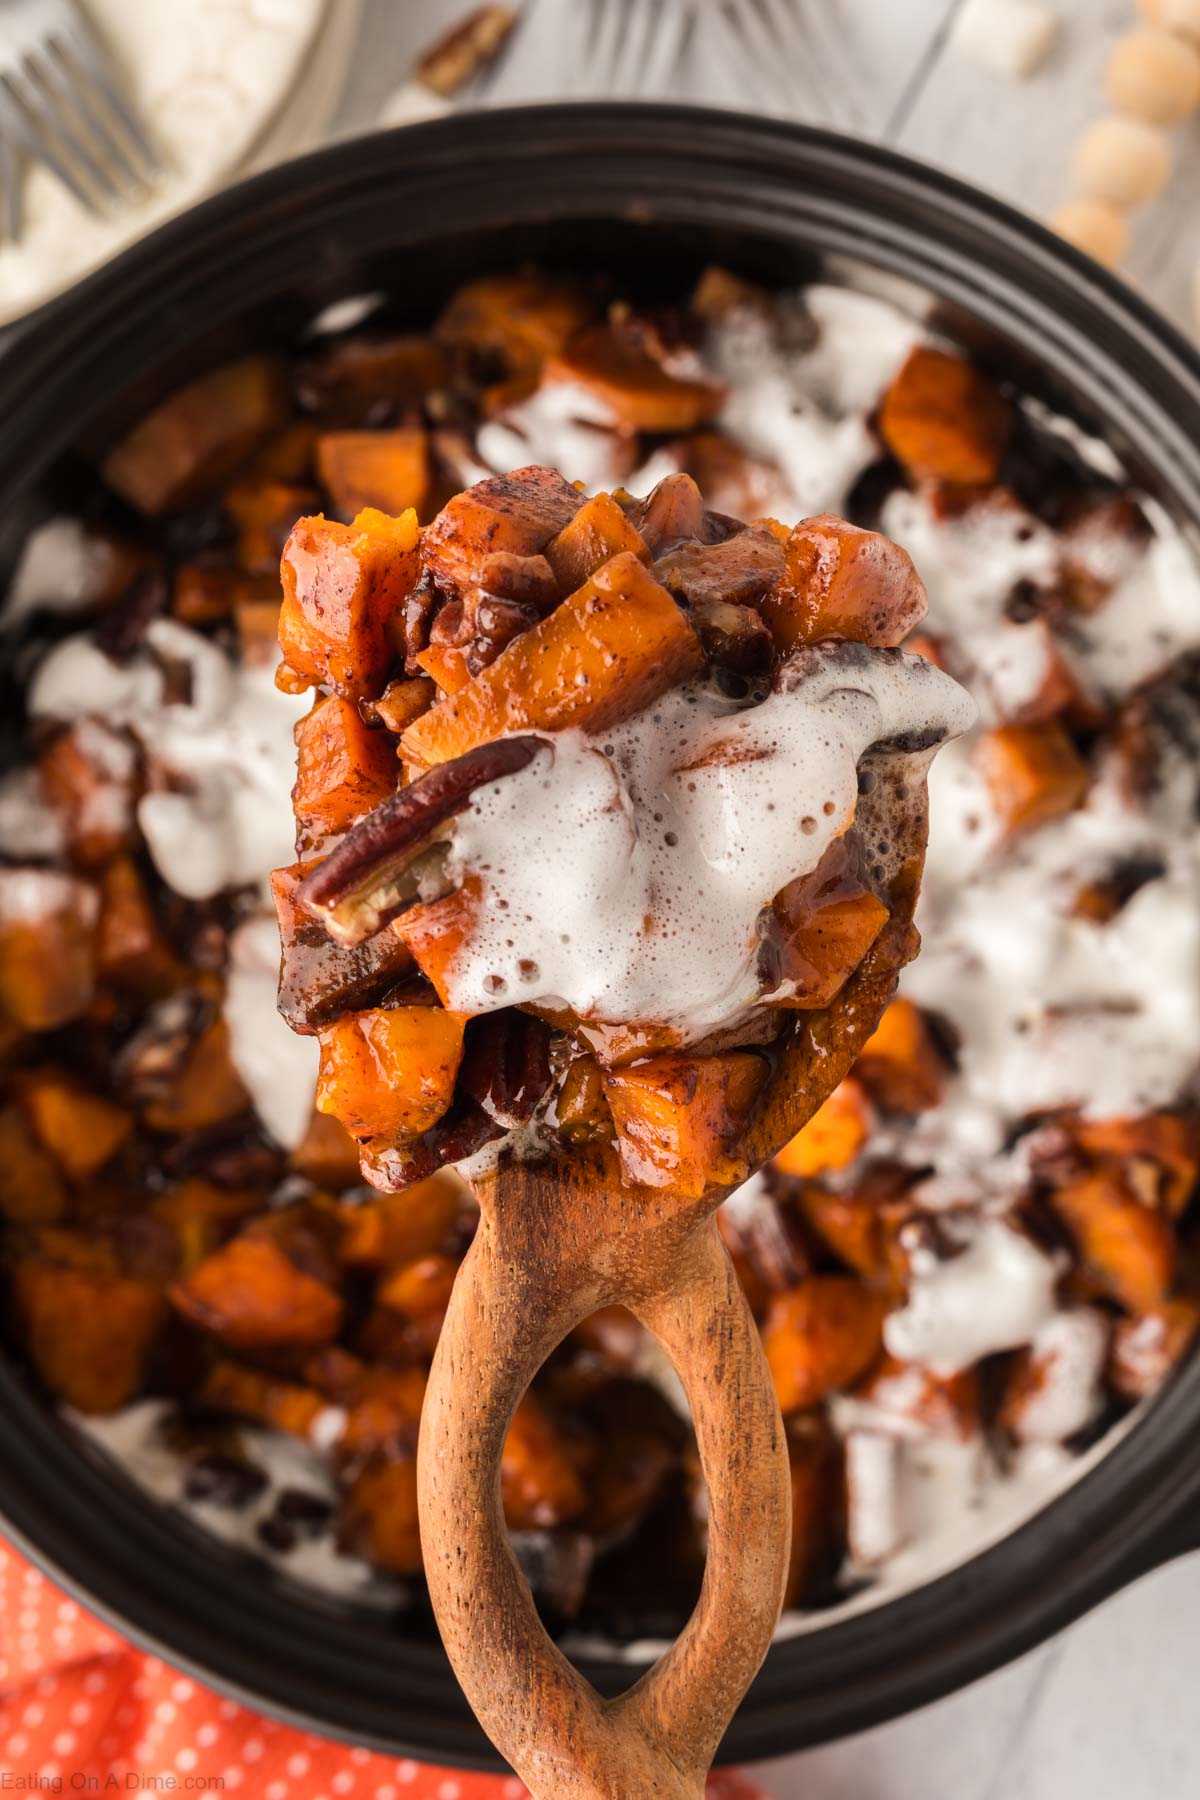 Best Crockpot Sweet Potato Casserole Recipe - How To Make Slow